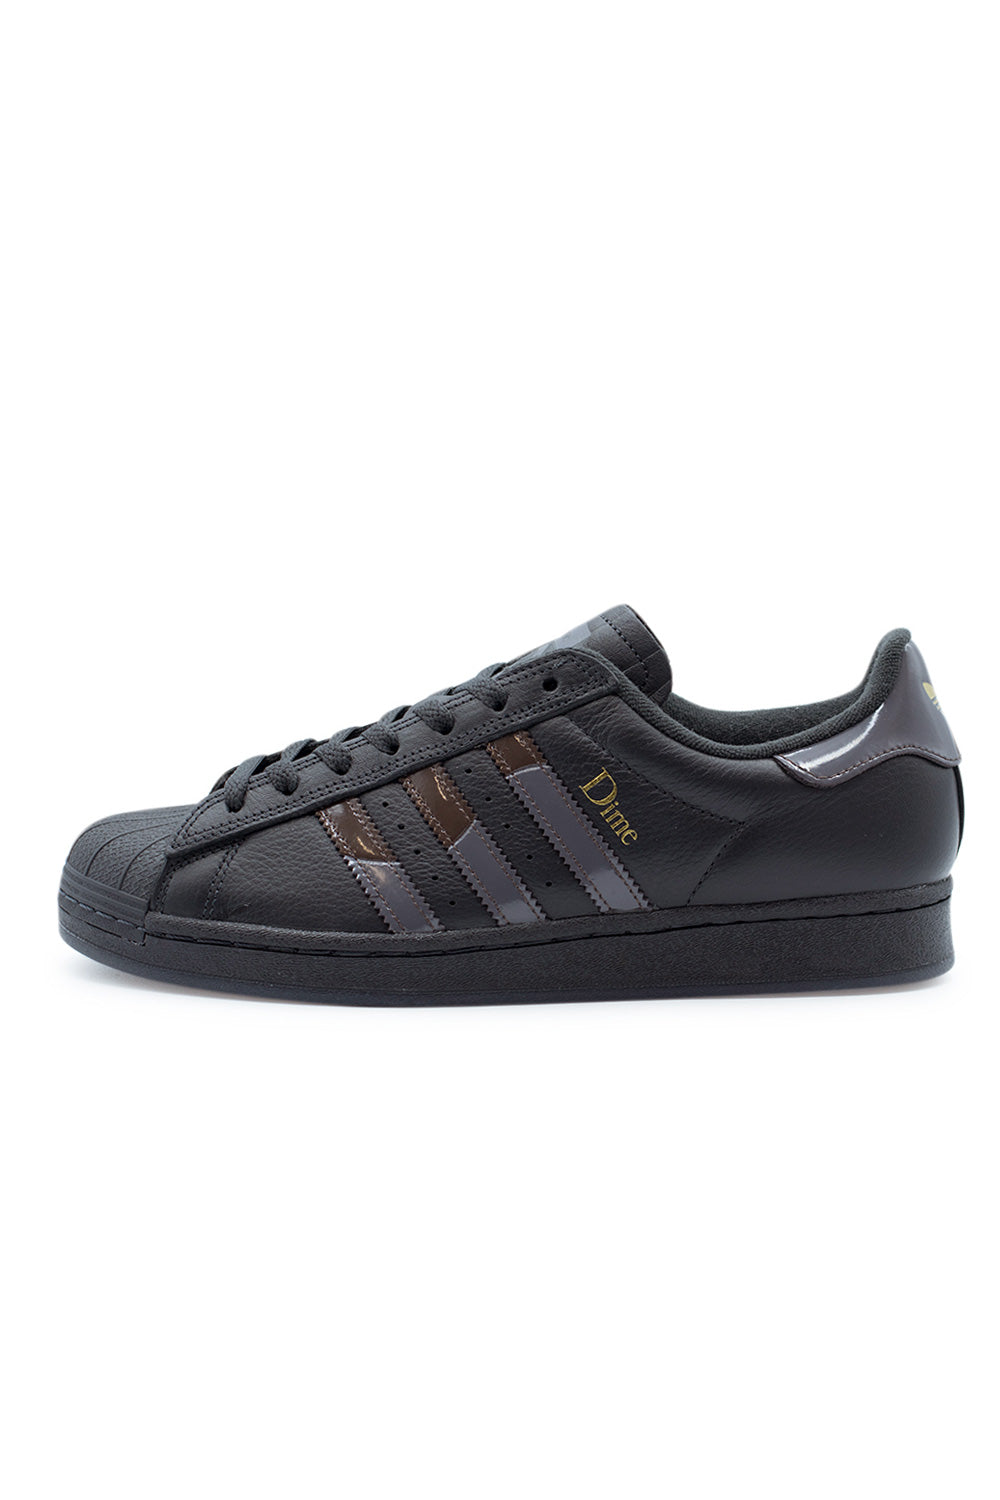 Adidas X Dime Superstar ADV Shoe Carbon / Grey Five / Brown - BONKERS